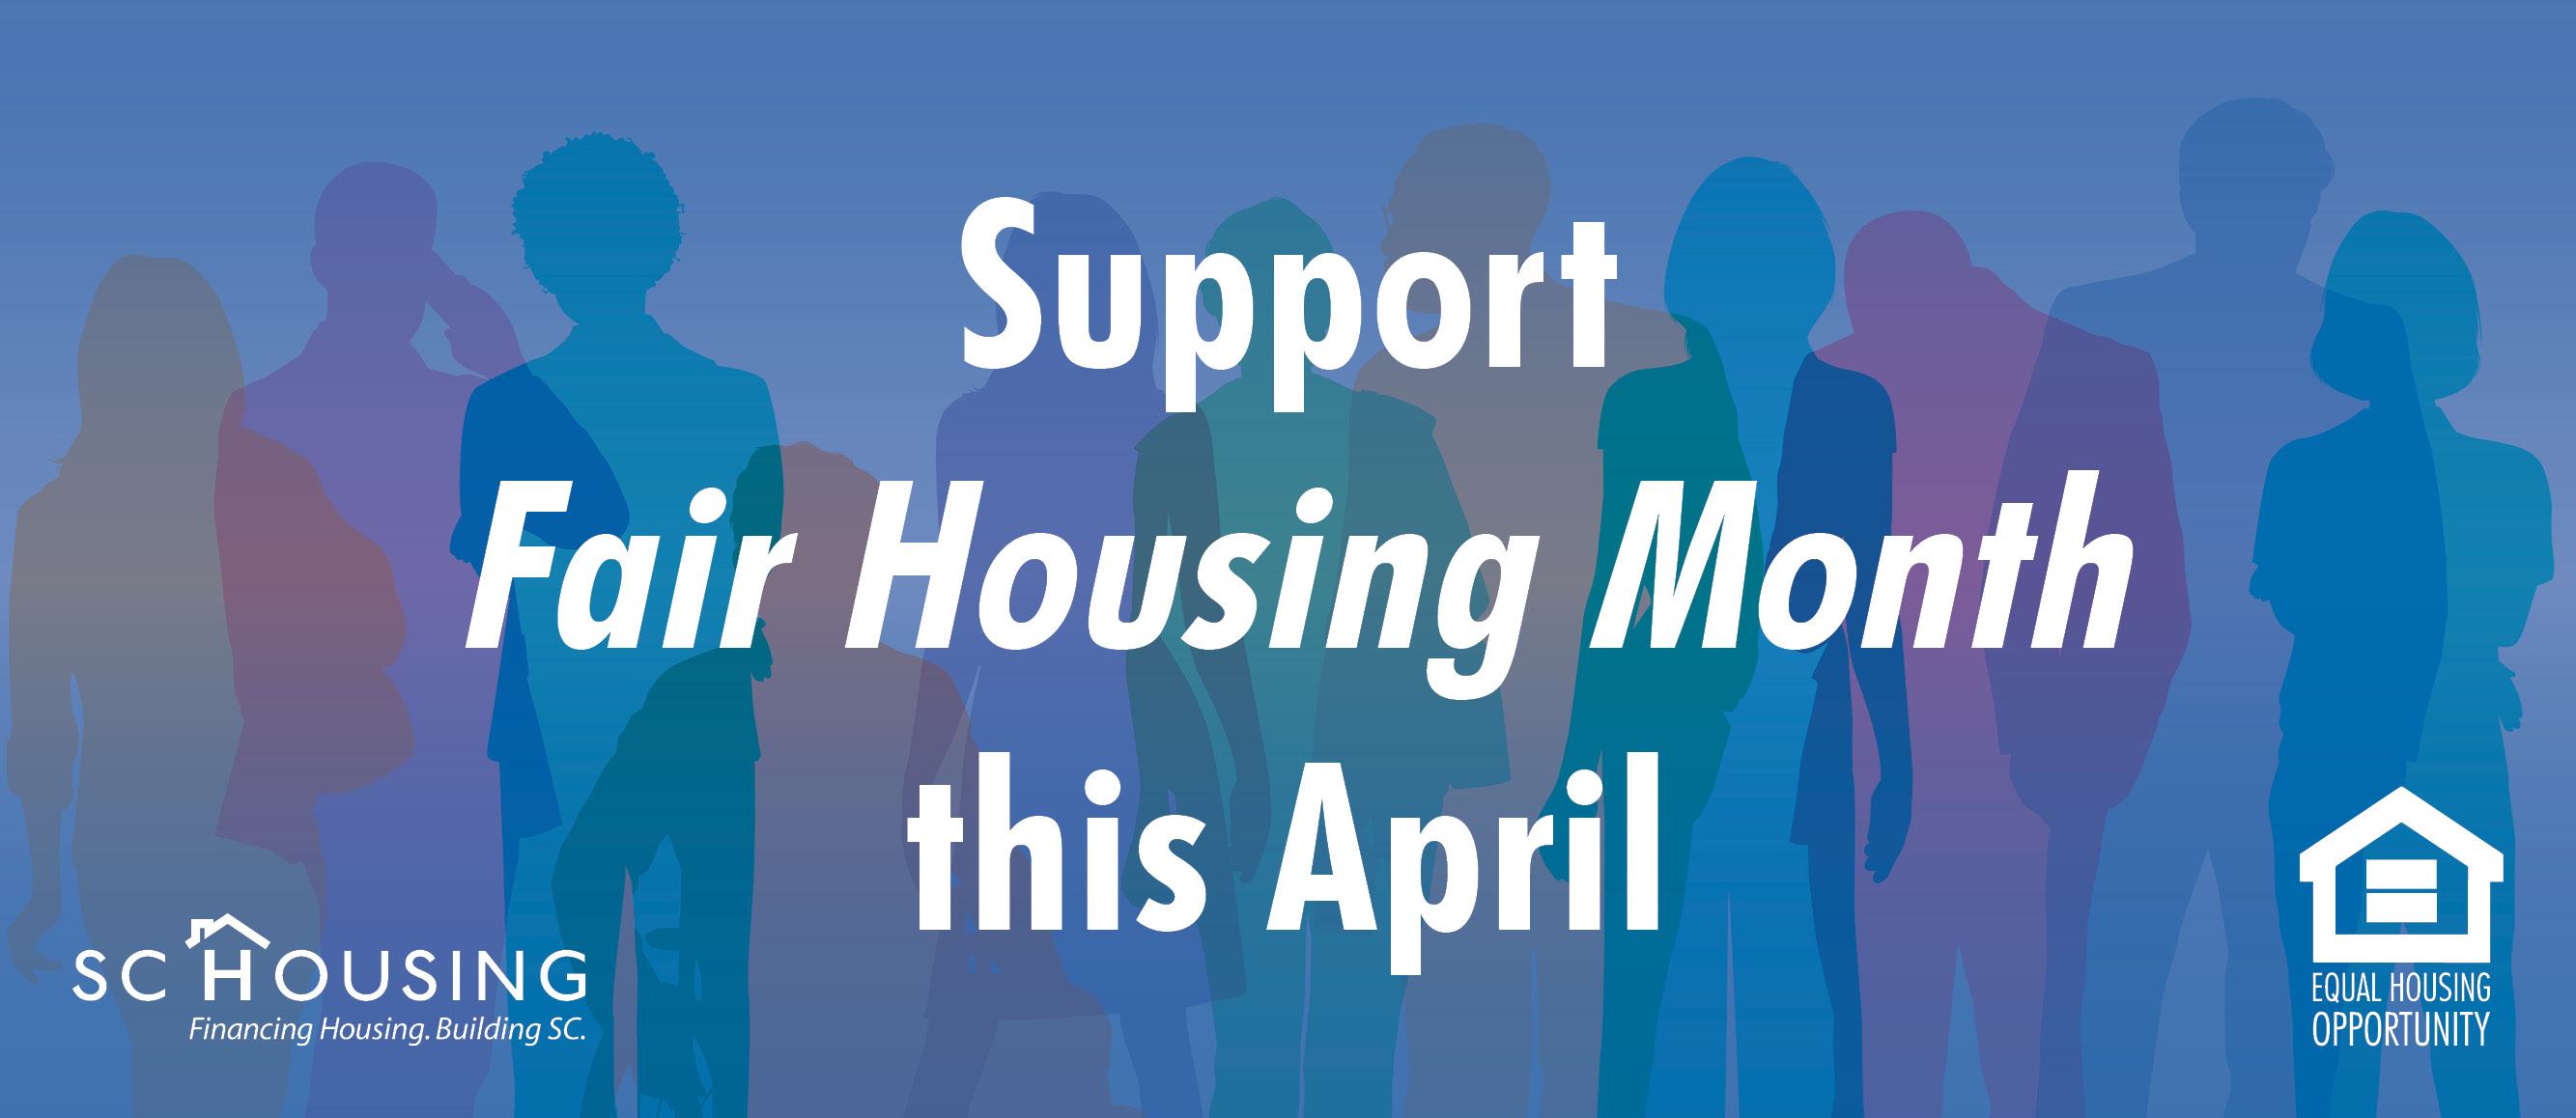 Read SC Housing's Fair Housing Month Proclamation 